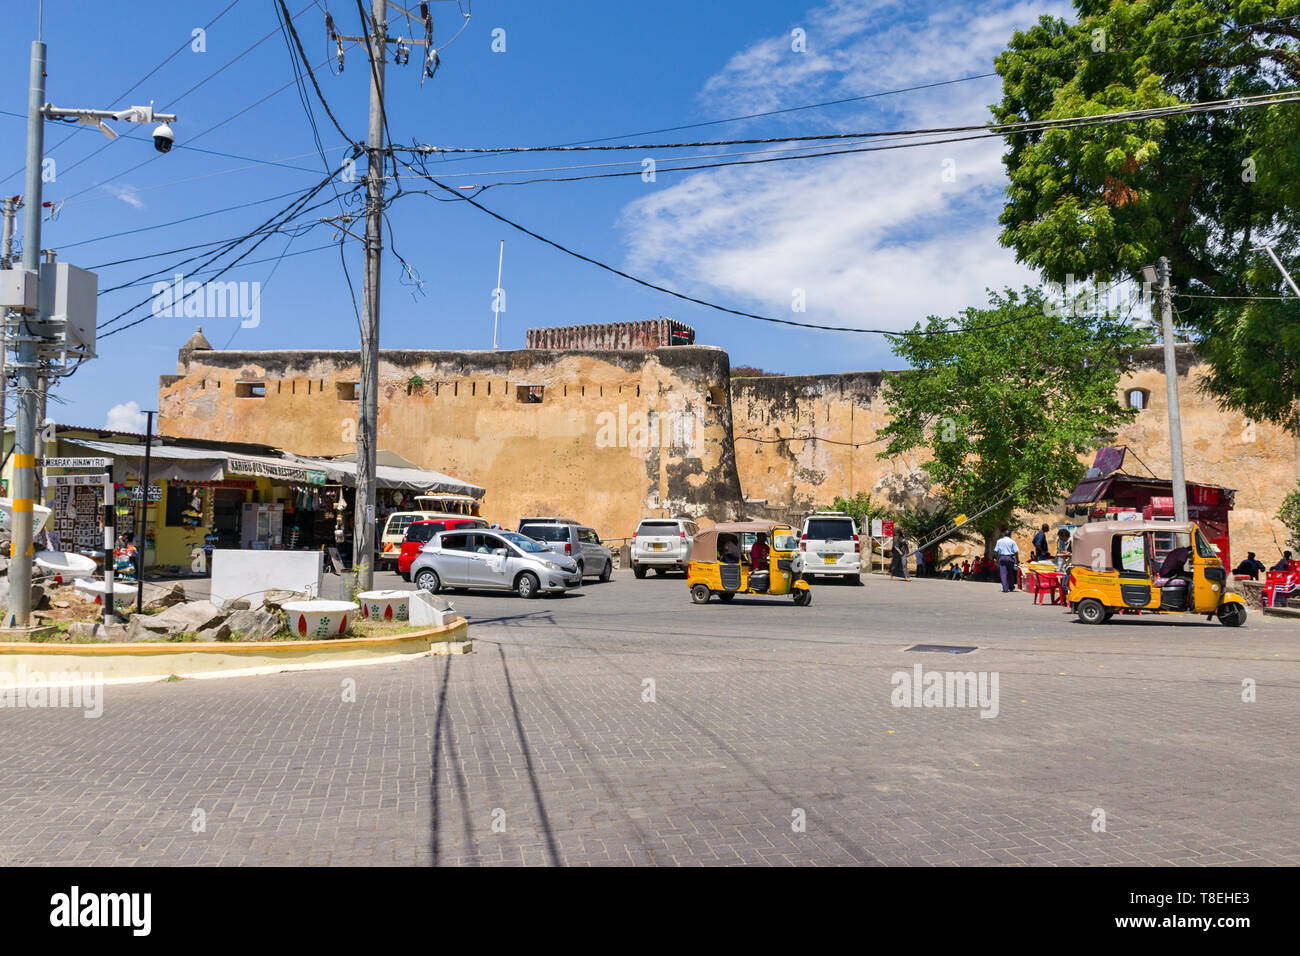 Exterior of Fort Jesus with vehicles, tuk tuks and people outside, Mombasa, Kenya Stock Photo